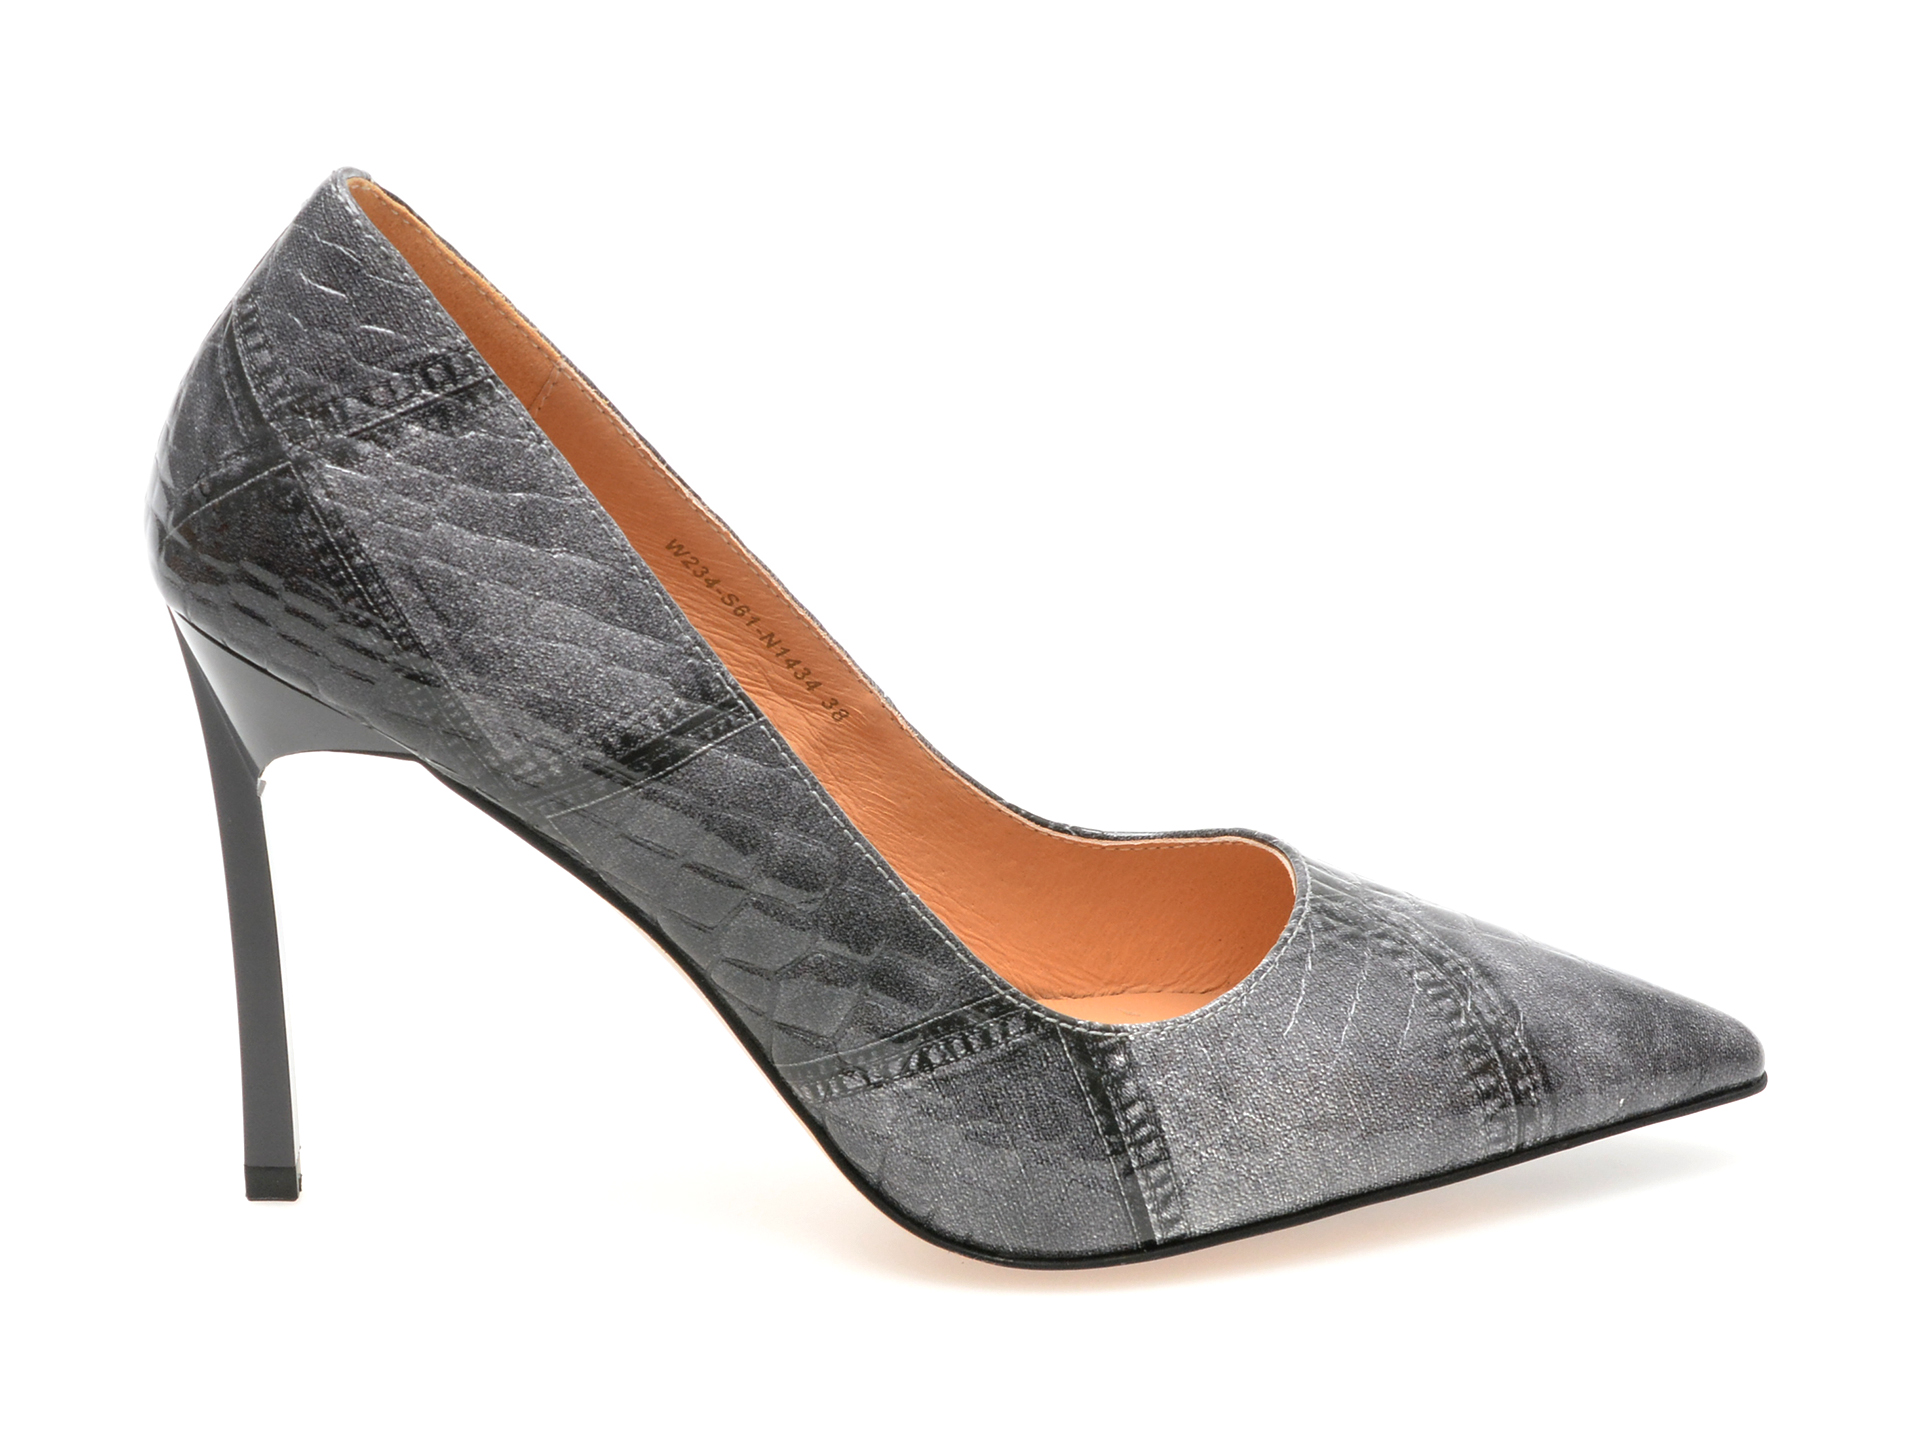 Pantofi Eleganti EPICA gri, S61, din piele naturala lacuita image7